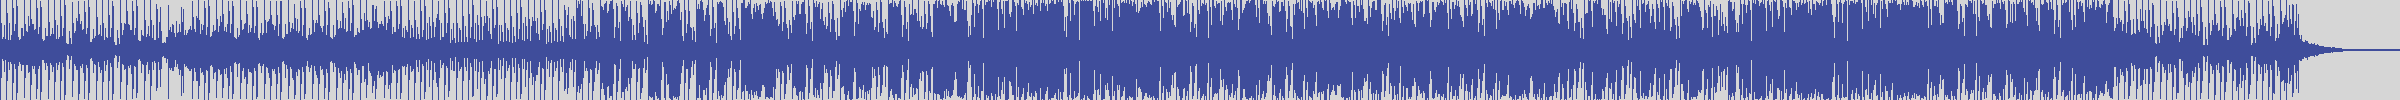 vitti_records [VIT020] Adl - Pillars [Original Mix] audio wave form